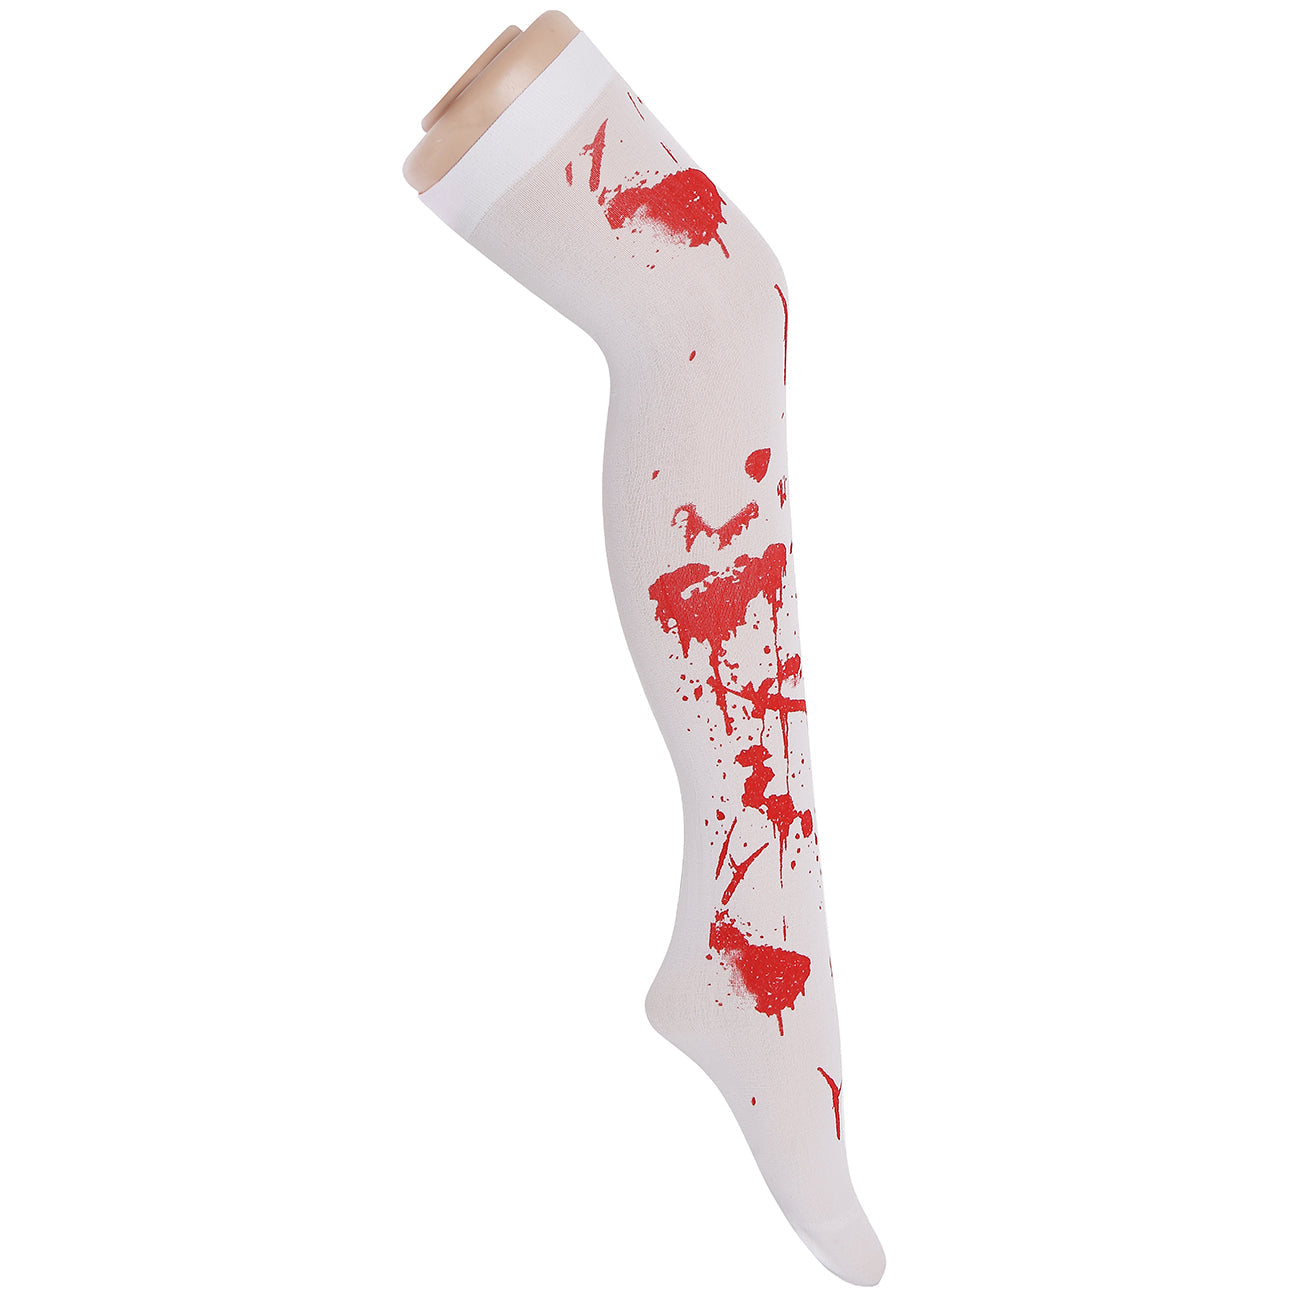 Cosplay over the knee socks women's halloween stockings